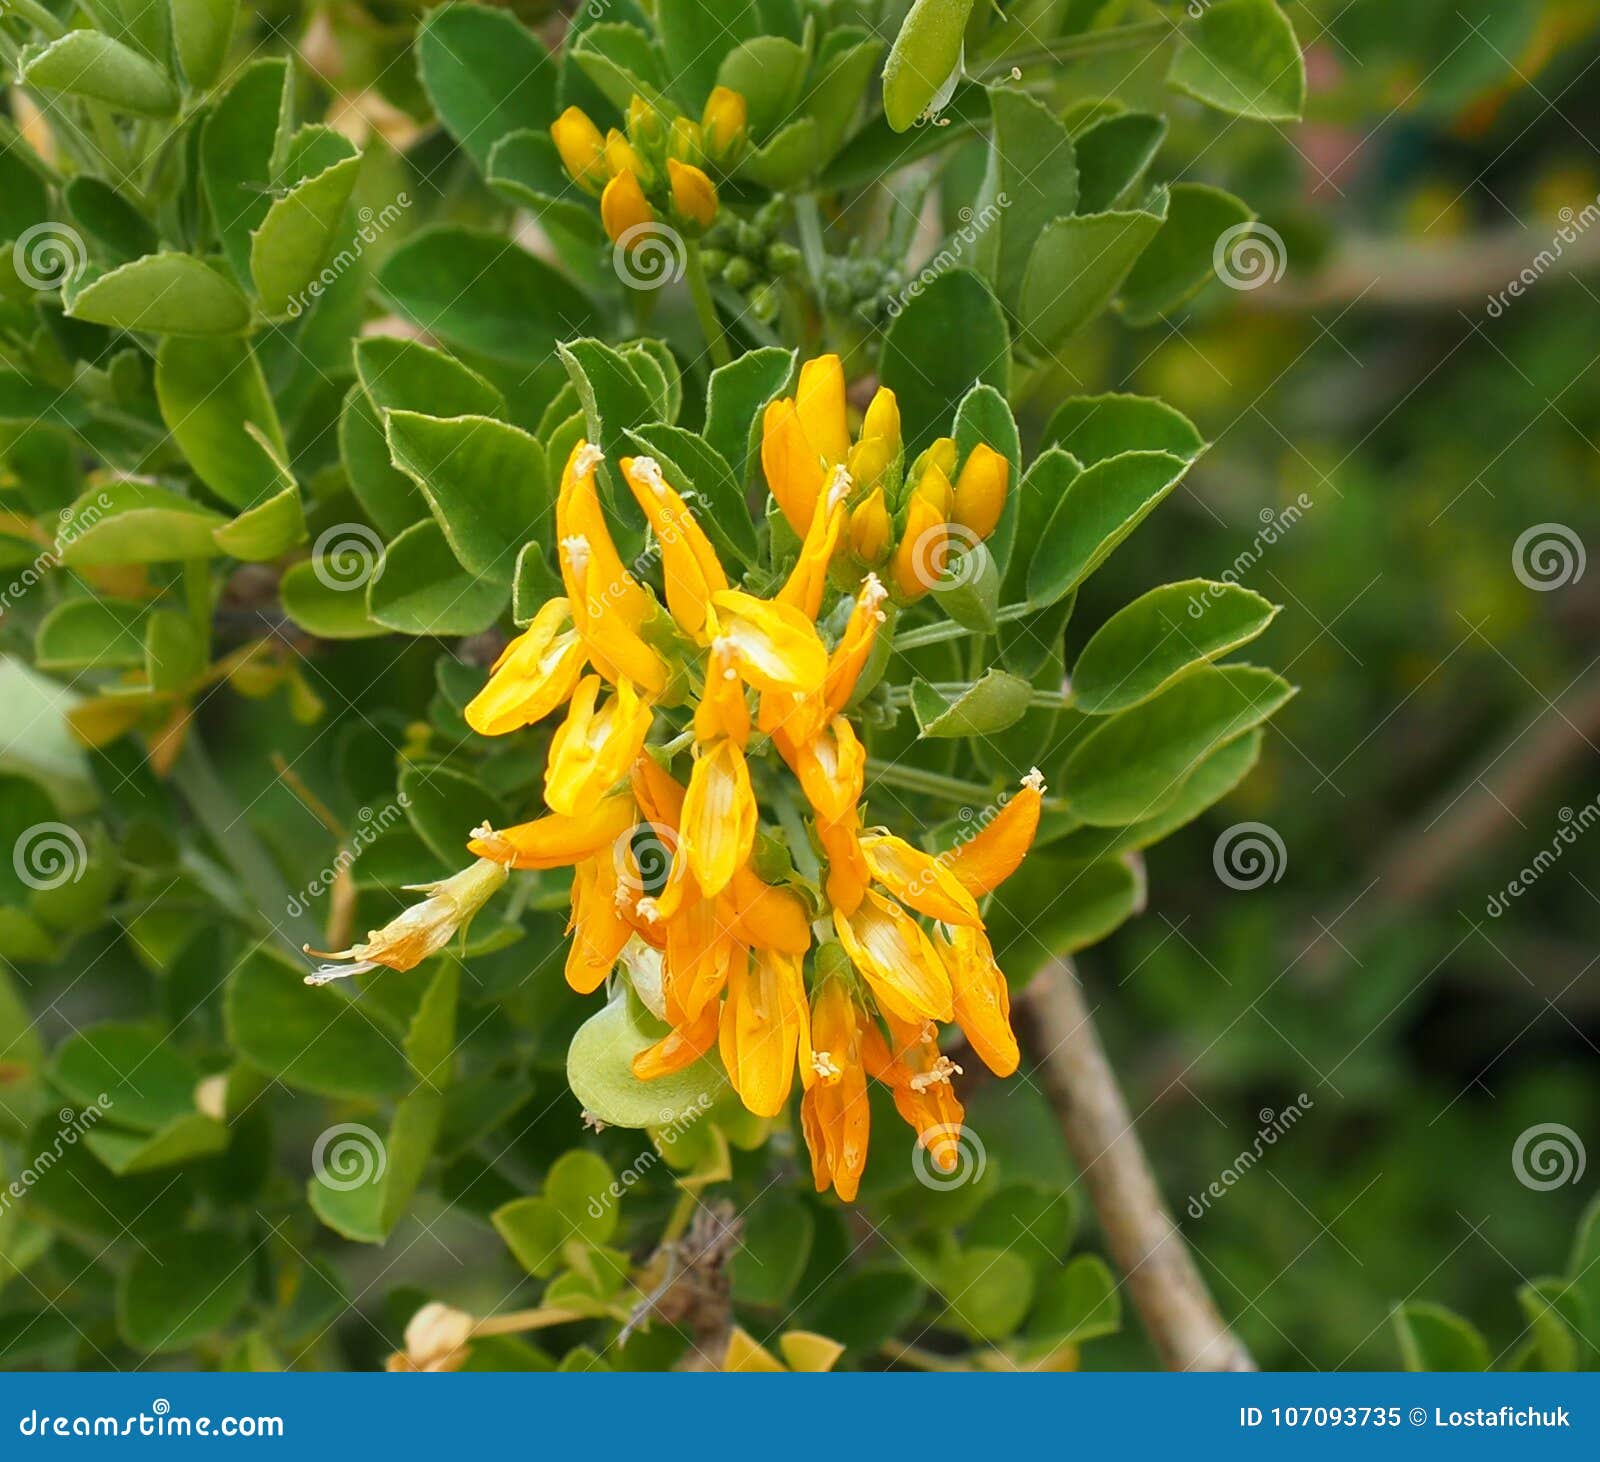 medicago arborea or tree medick flowers in crete greece